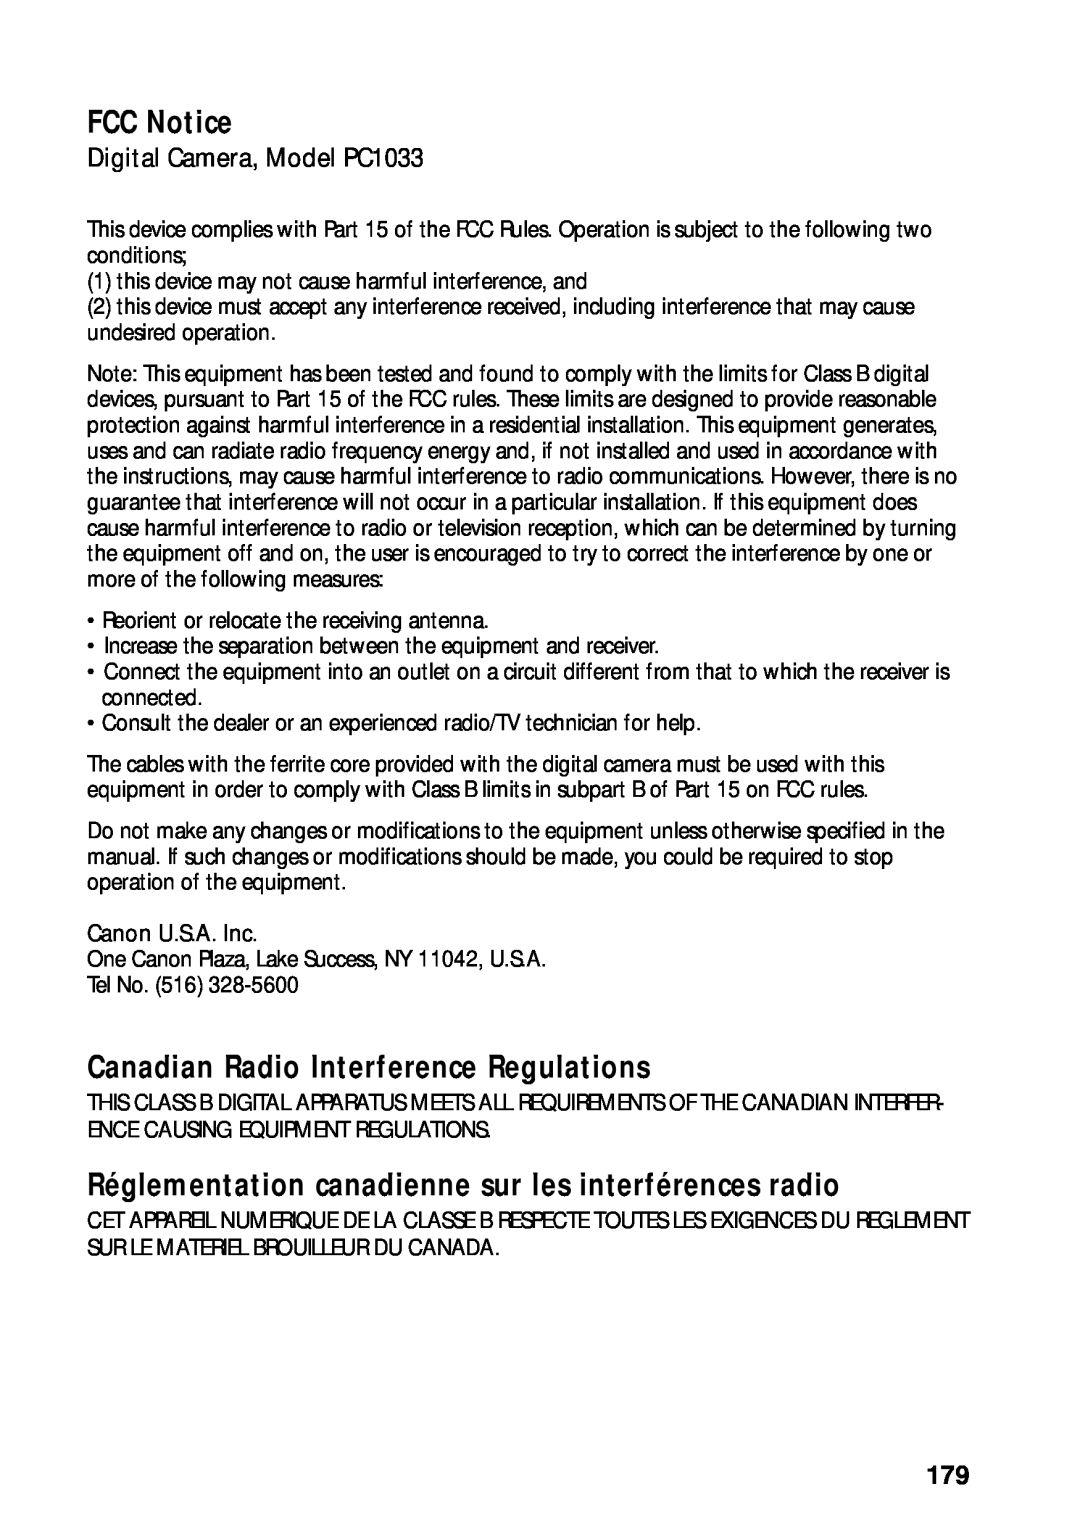 Canon PowerShot S45 manual FCC Notice, Canadian Radio Interference Regulations, Digital Camera, Model PC1033 